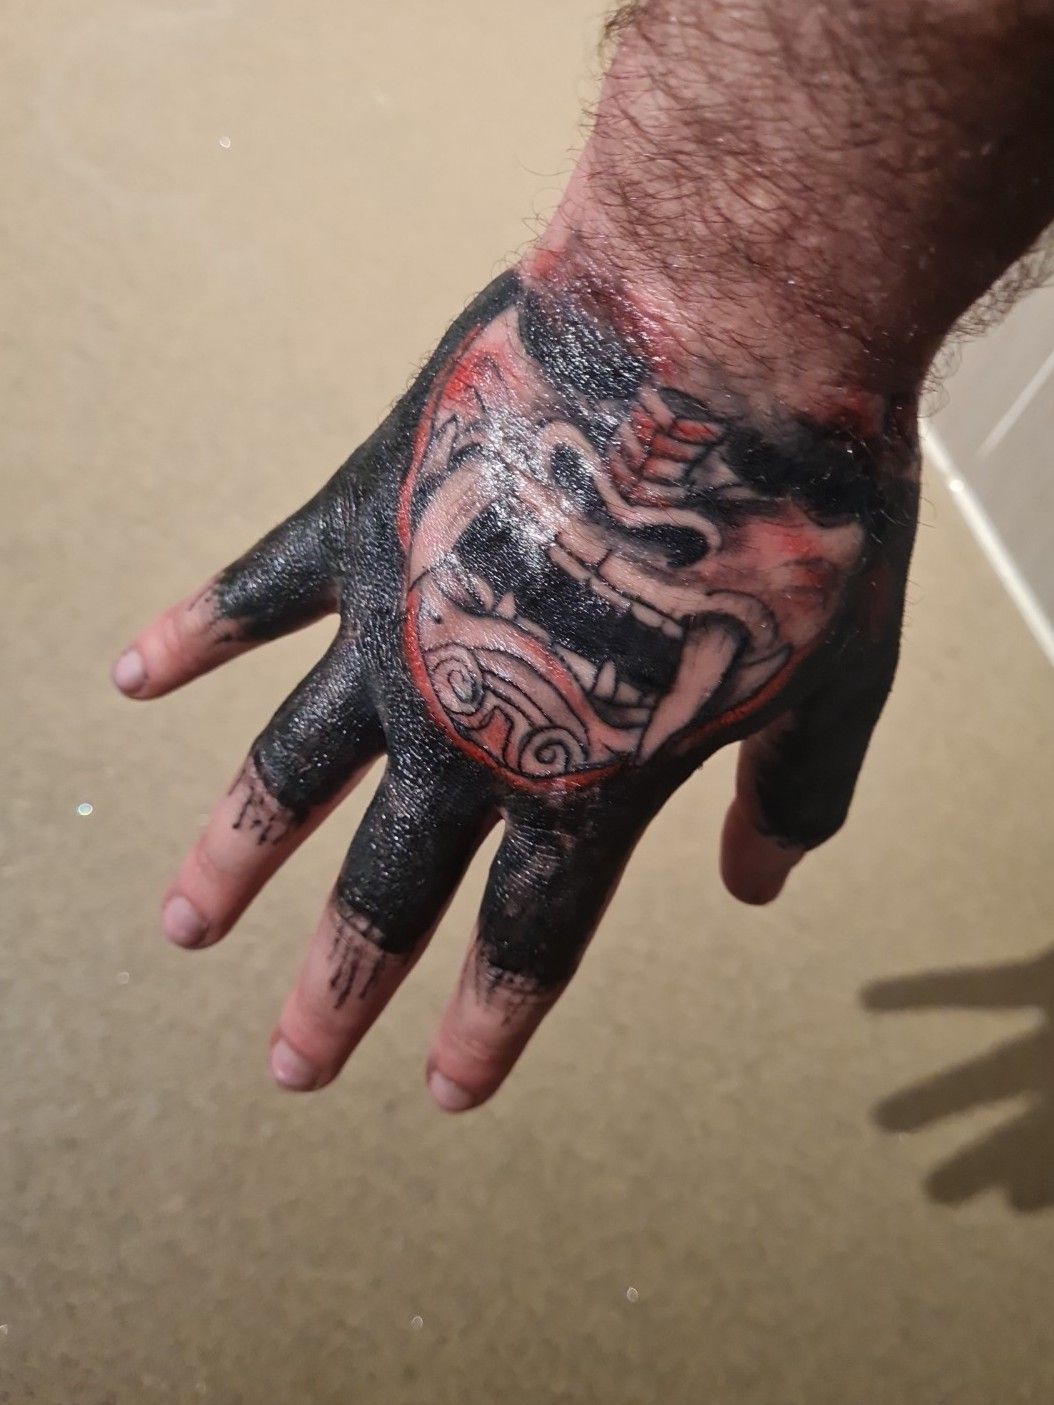 jesses hand tattooTikTok Search